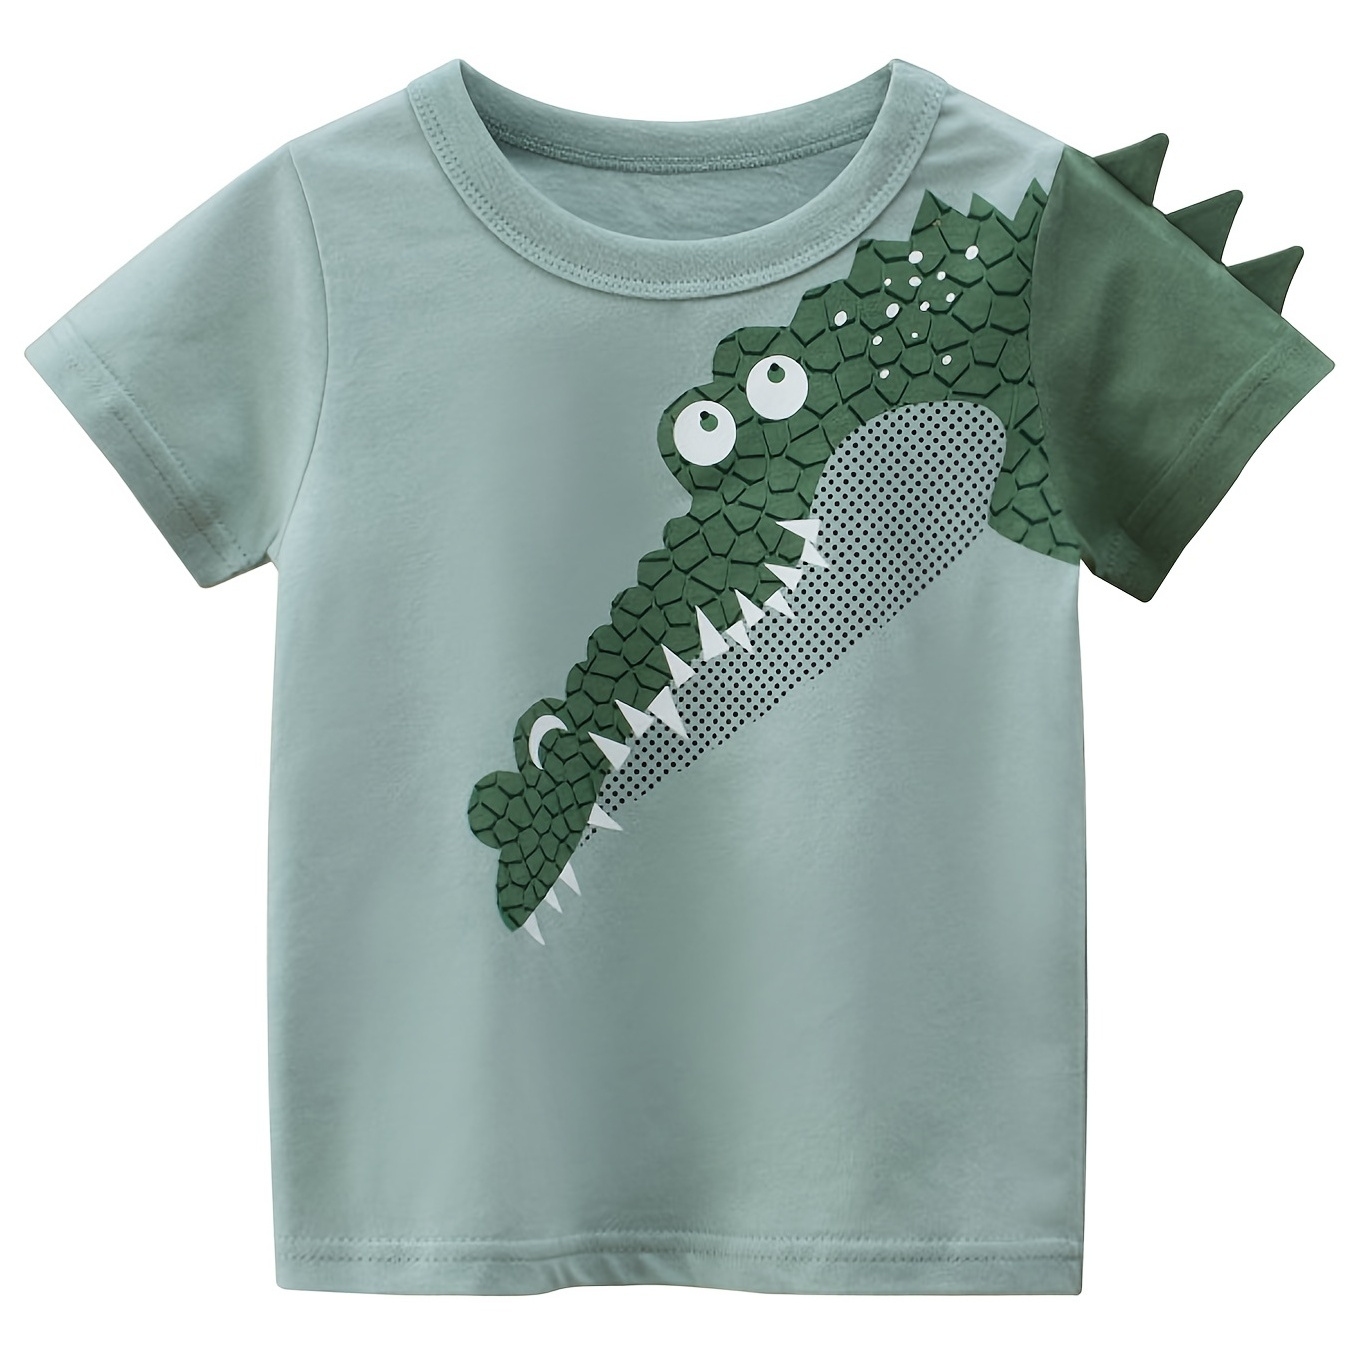 

Boys Cartoon Crocodile T-shirt Tee Top Short Sleeves Crew Neck Summer Casual Kids Cotton Clothes